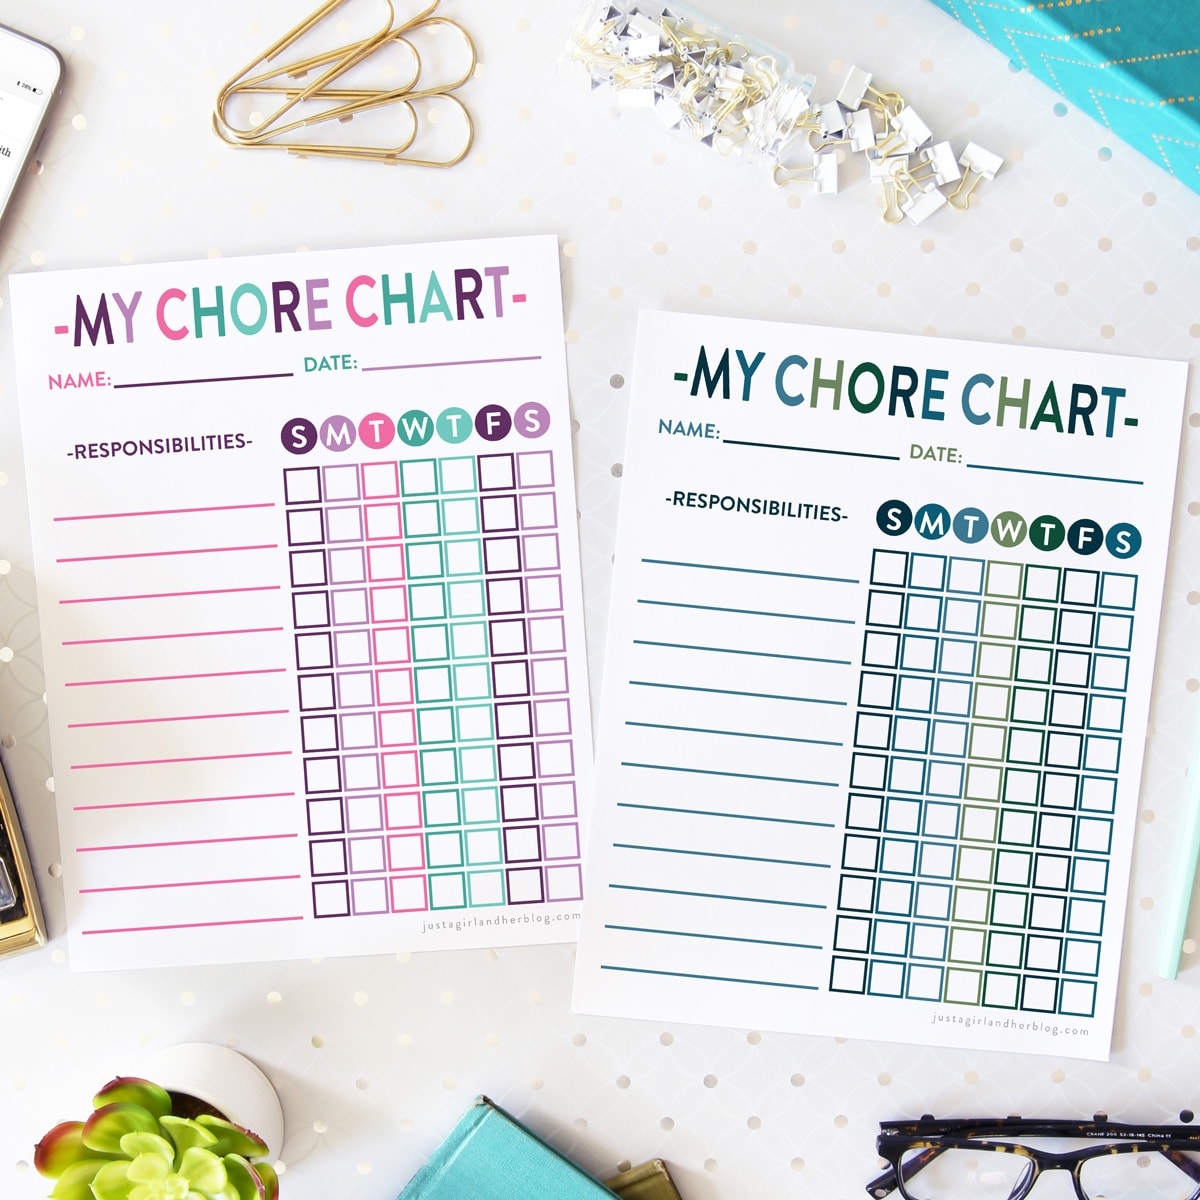 Free Printable Chore Charts To Help Kids Get Organized - Free Printable Chore List